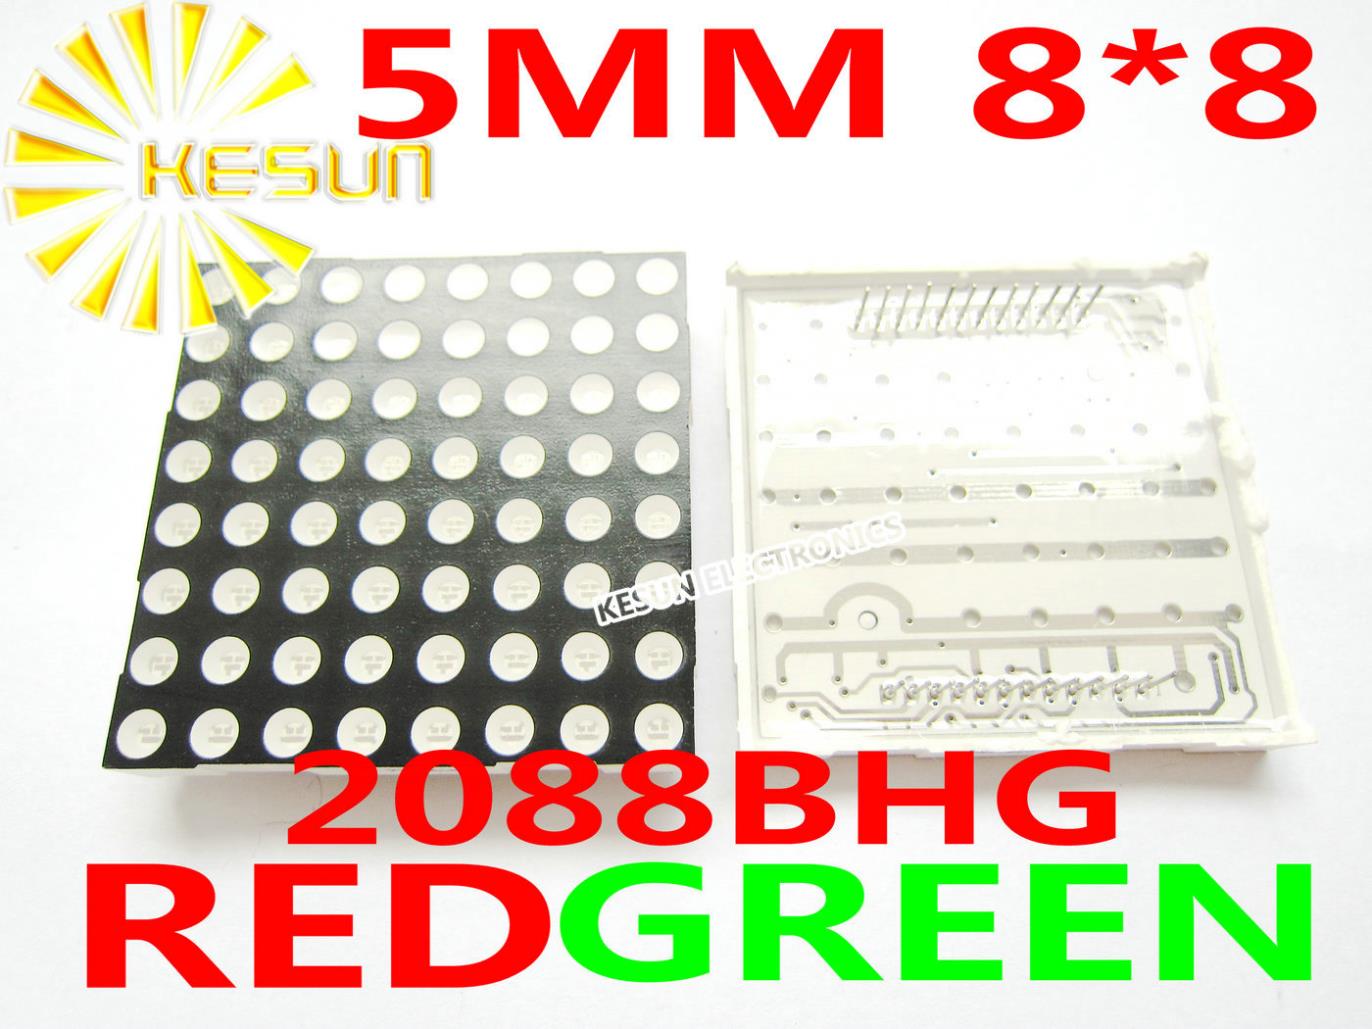 50Pcs X 5Mm 8X8 Rood Groen Bi-Color Gemeenschappelijke Anode 60*60 Led Dot Matrix Digitale buis Module 2088BHG Led Display Module